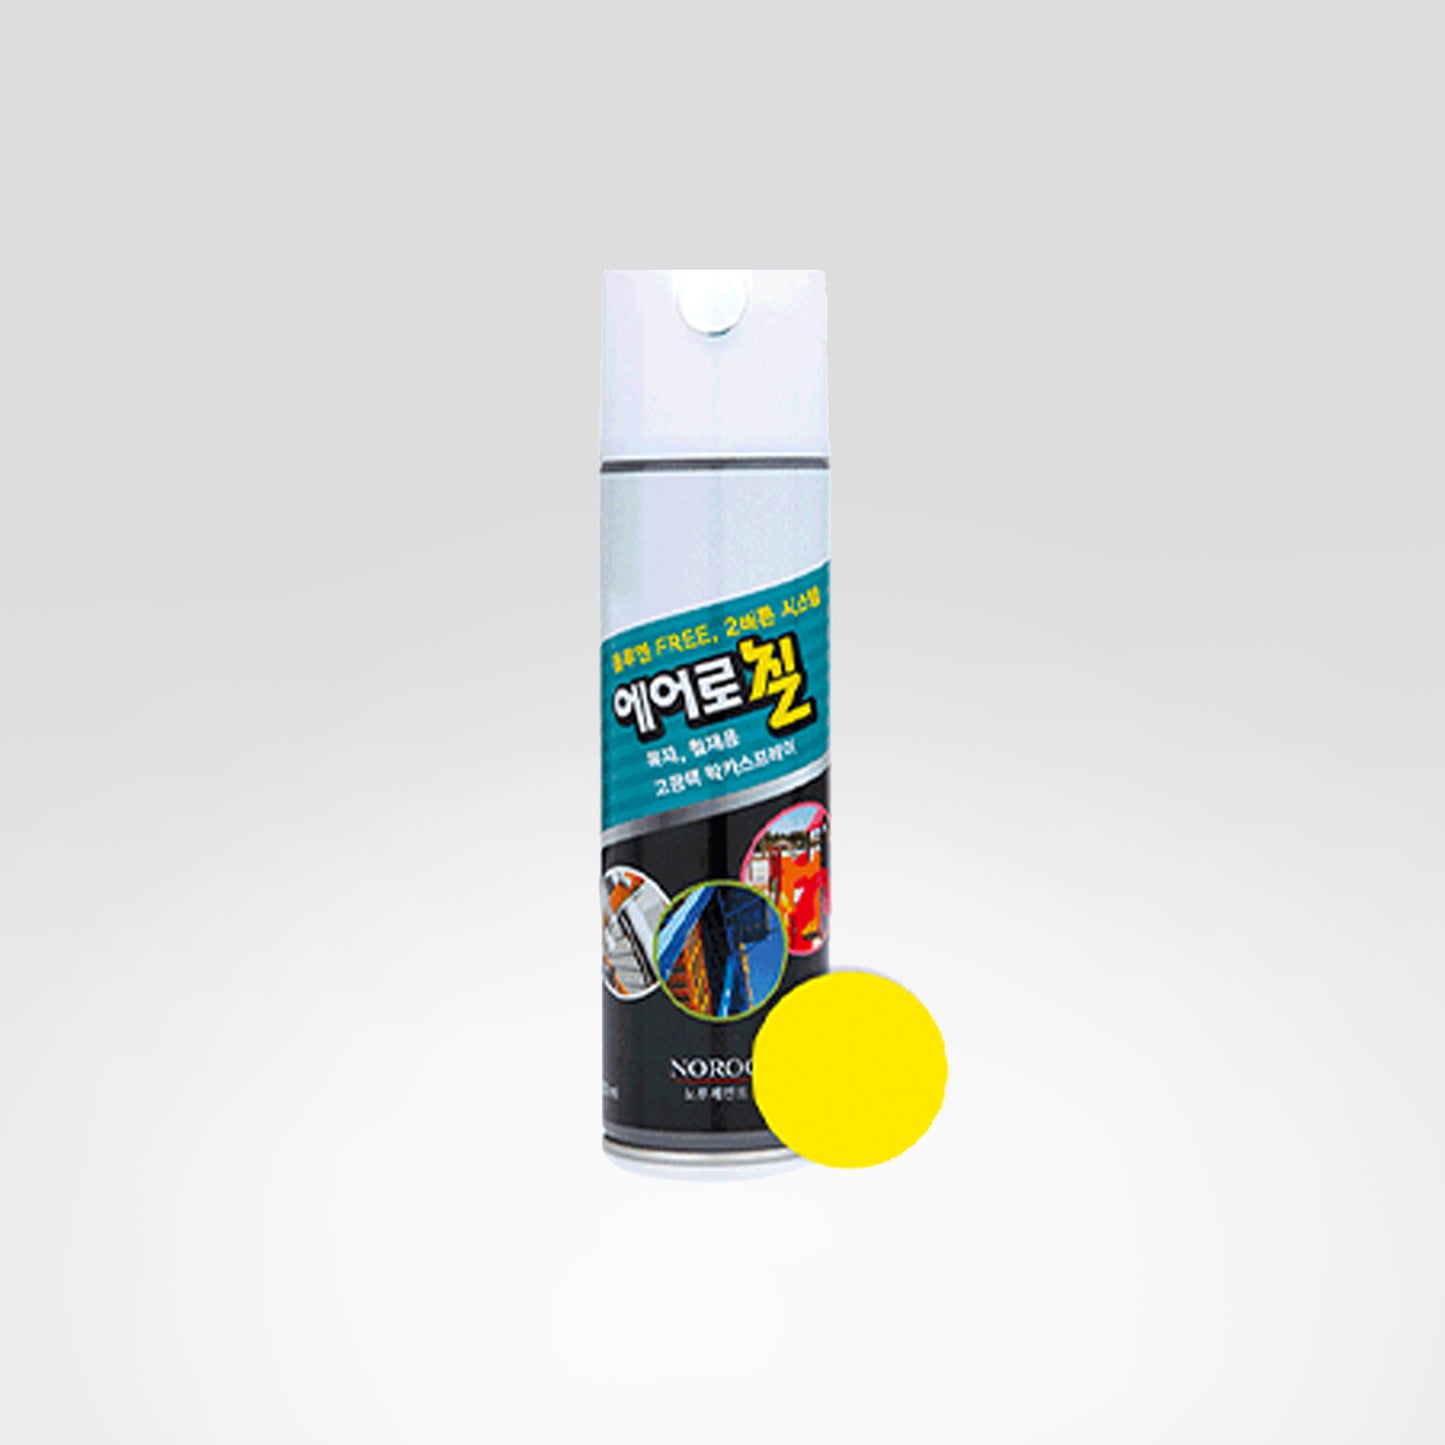 ILSIN Lacquer Spray Can Yellow 420ml